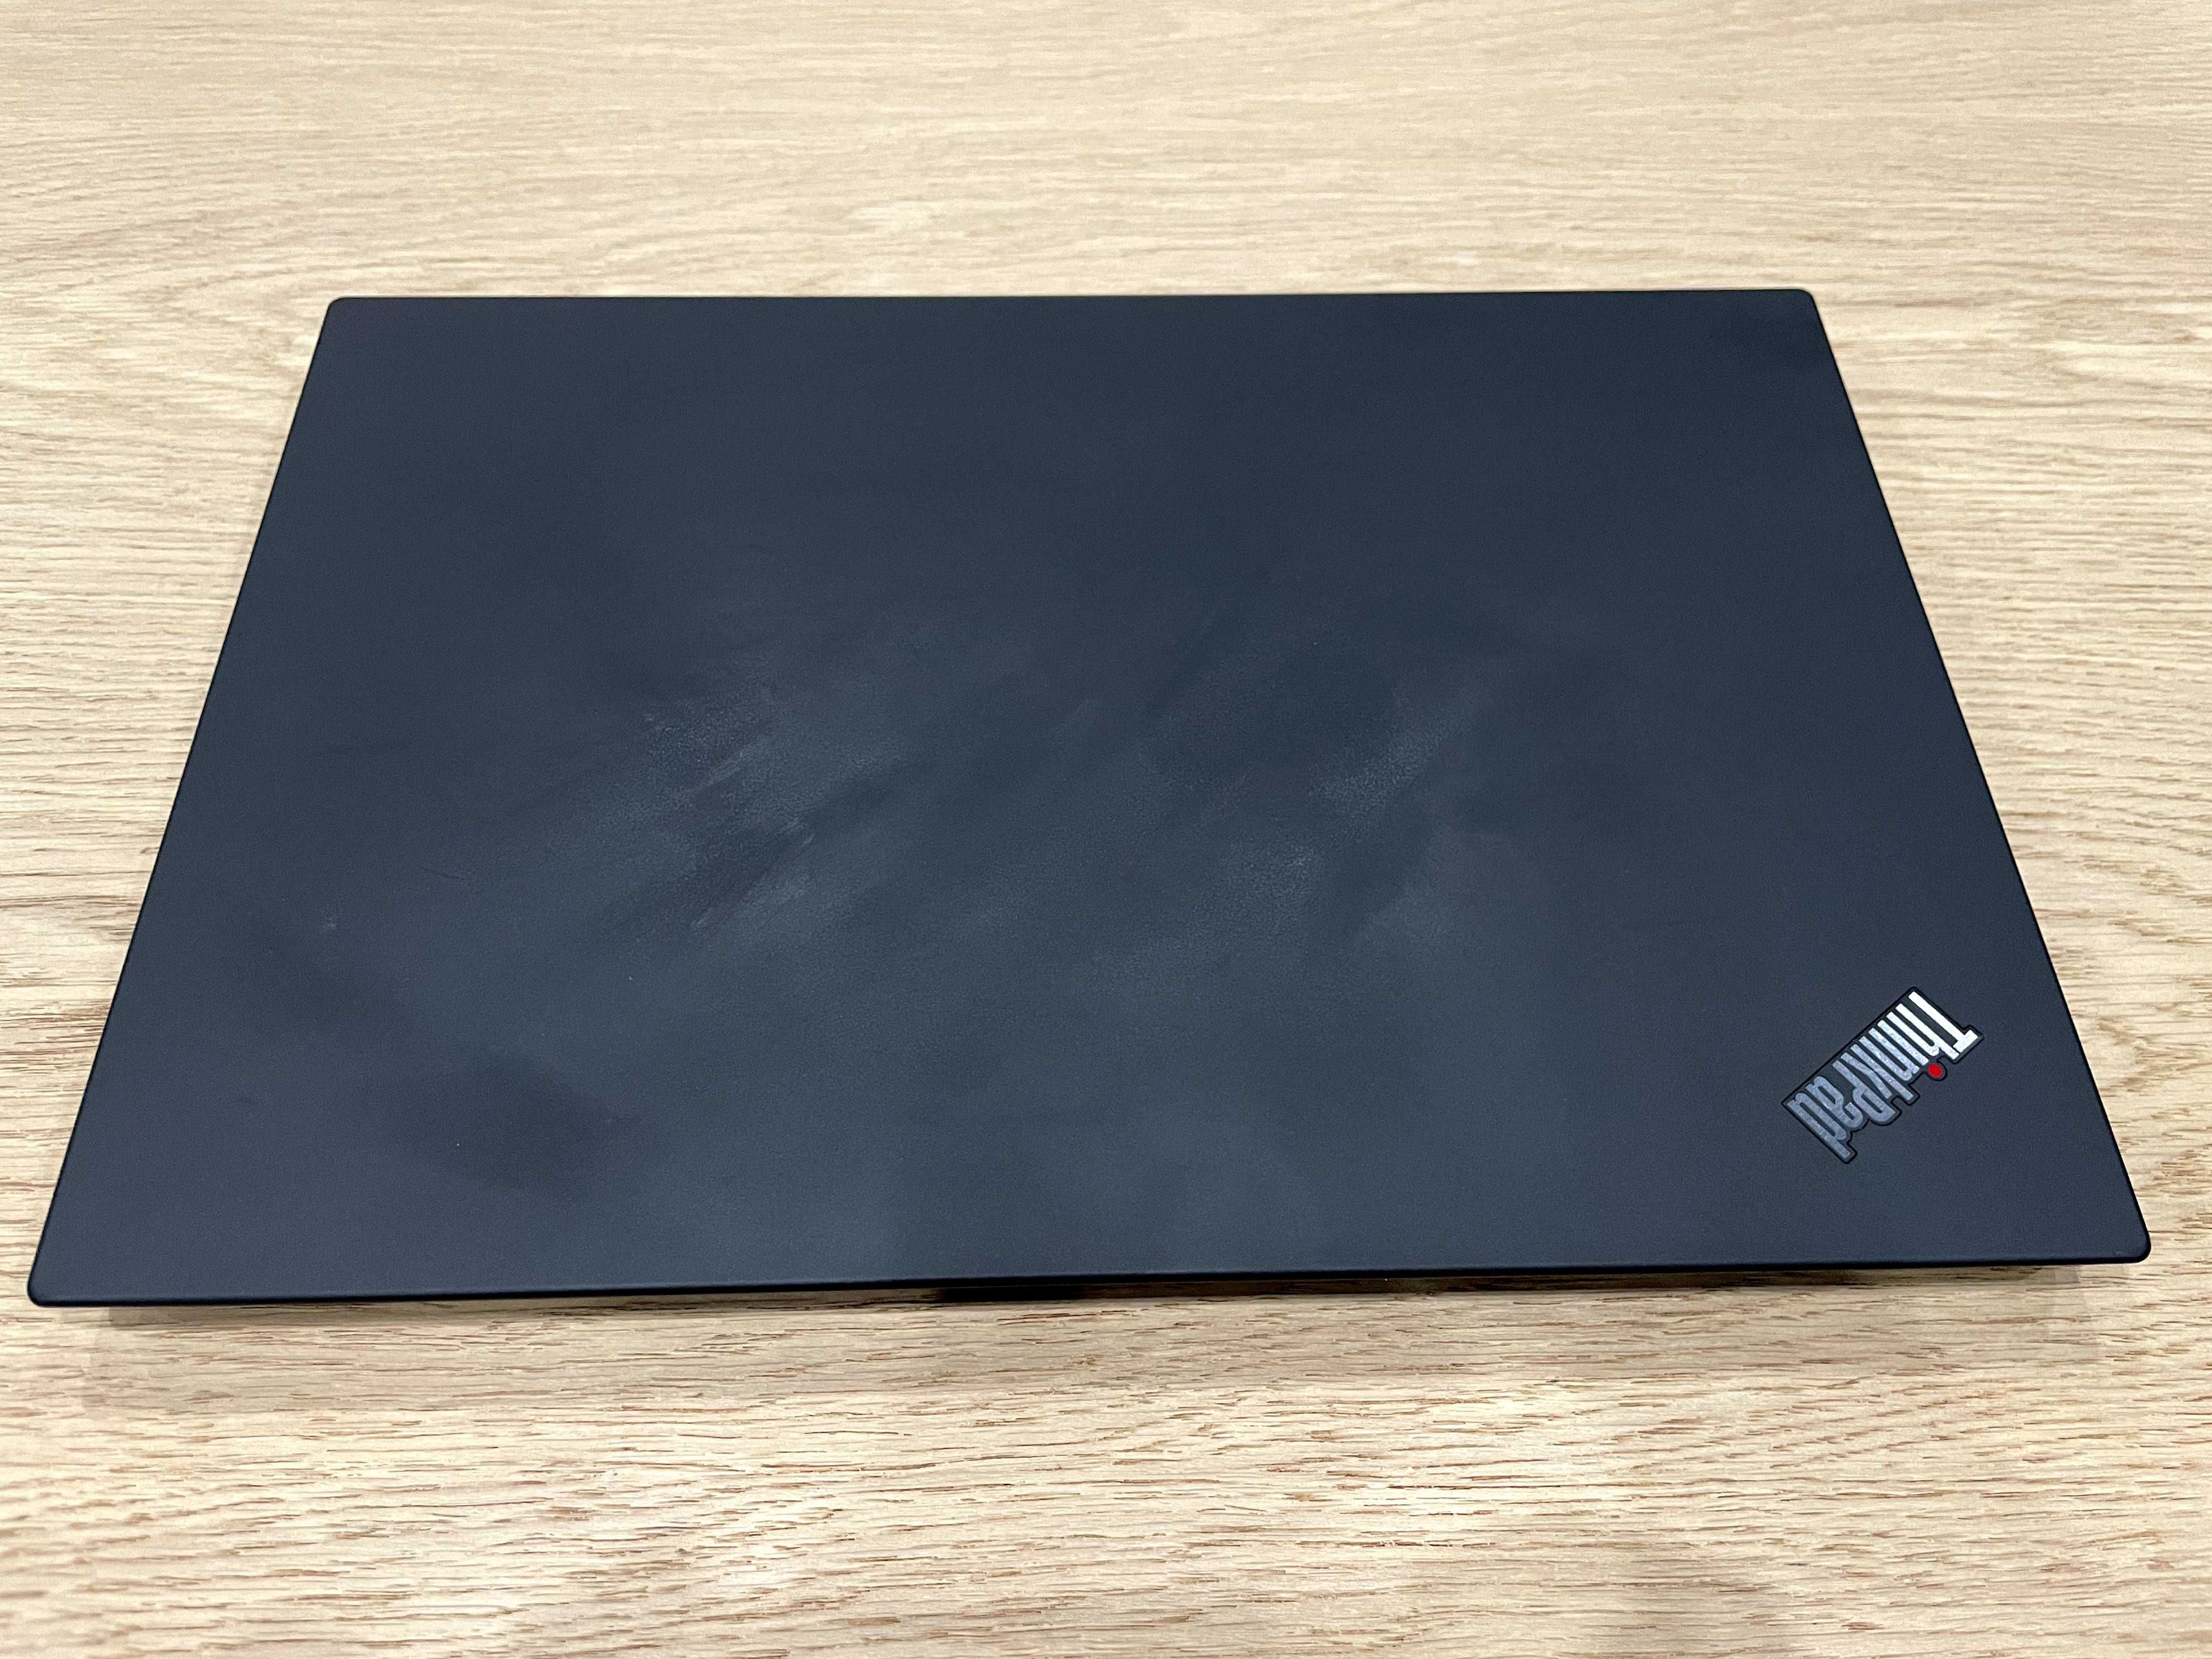 Ноутбук Lenovo ThinkPad i7 10th gen/16Gb RAM/512 SSD